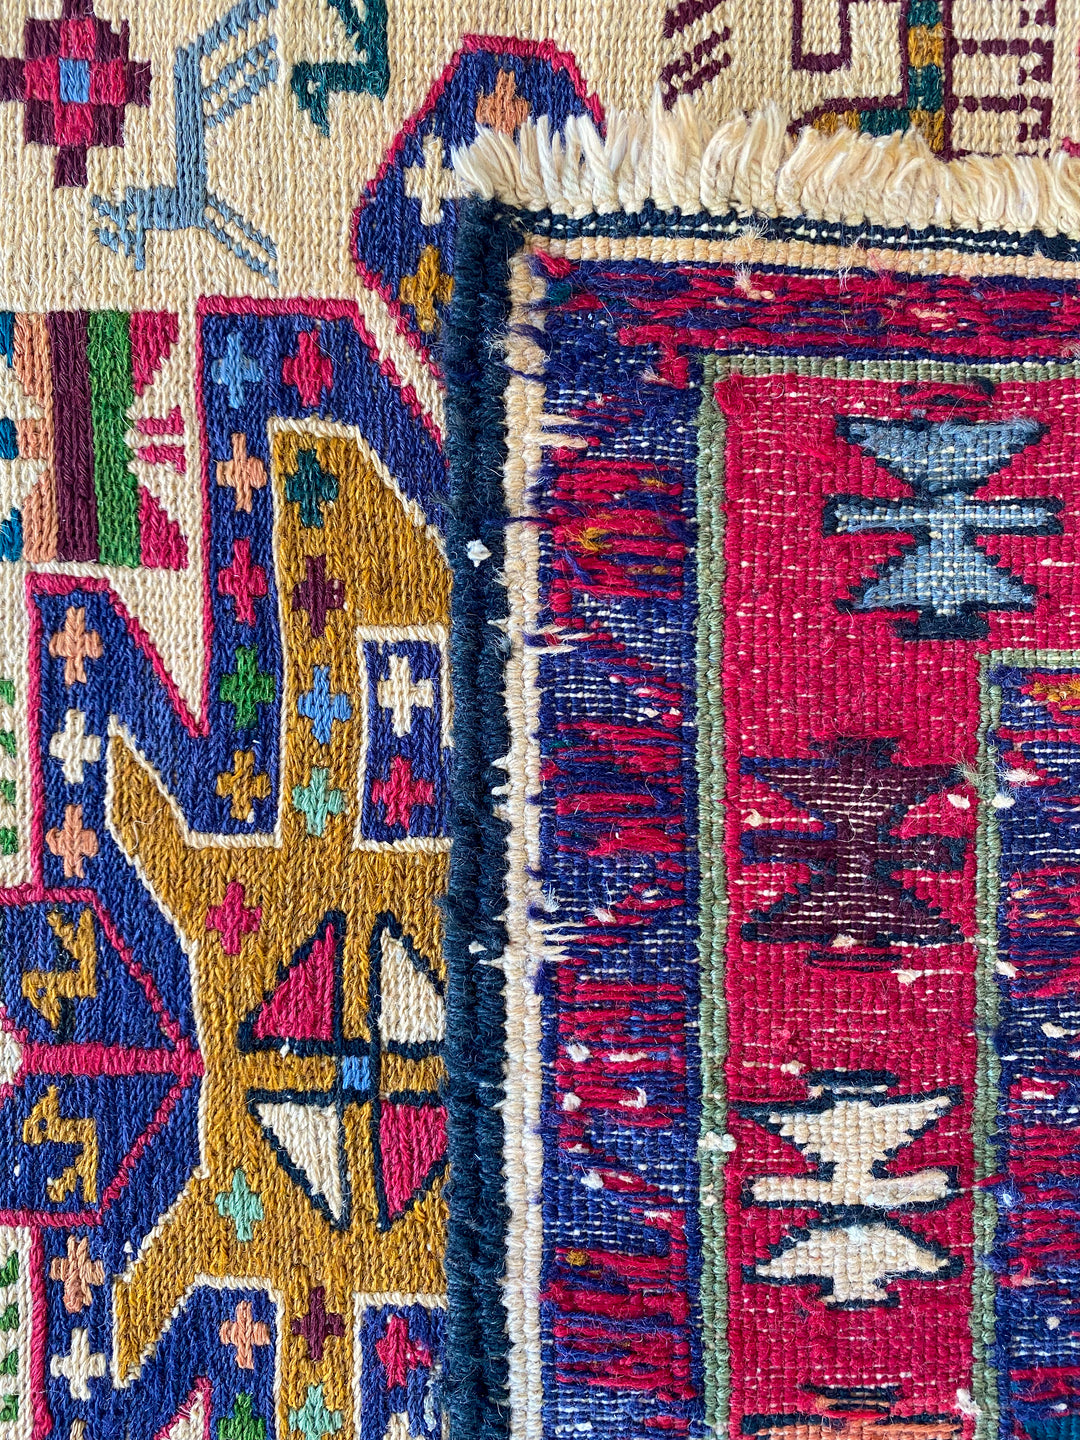 Sumak Kilim - Size: 4.4 x 3 - Imam Carpet Co